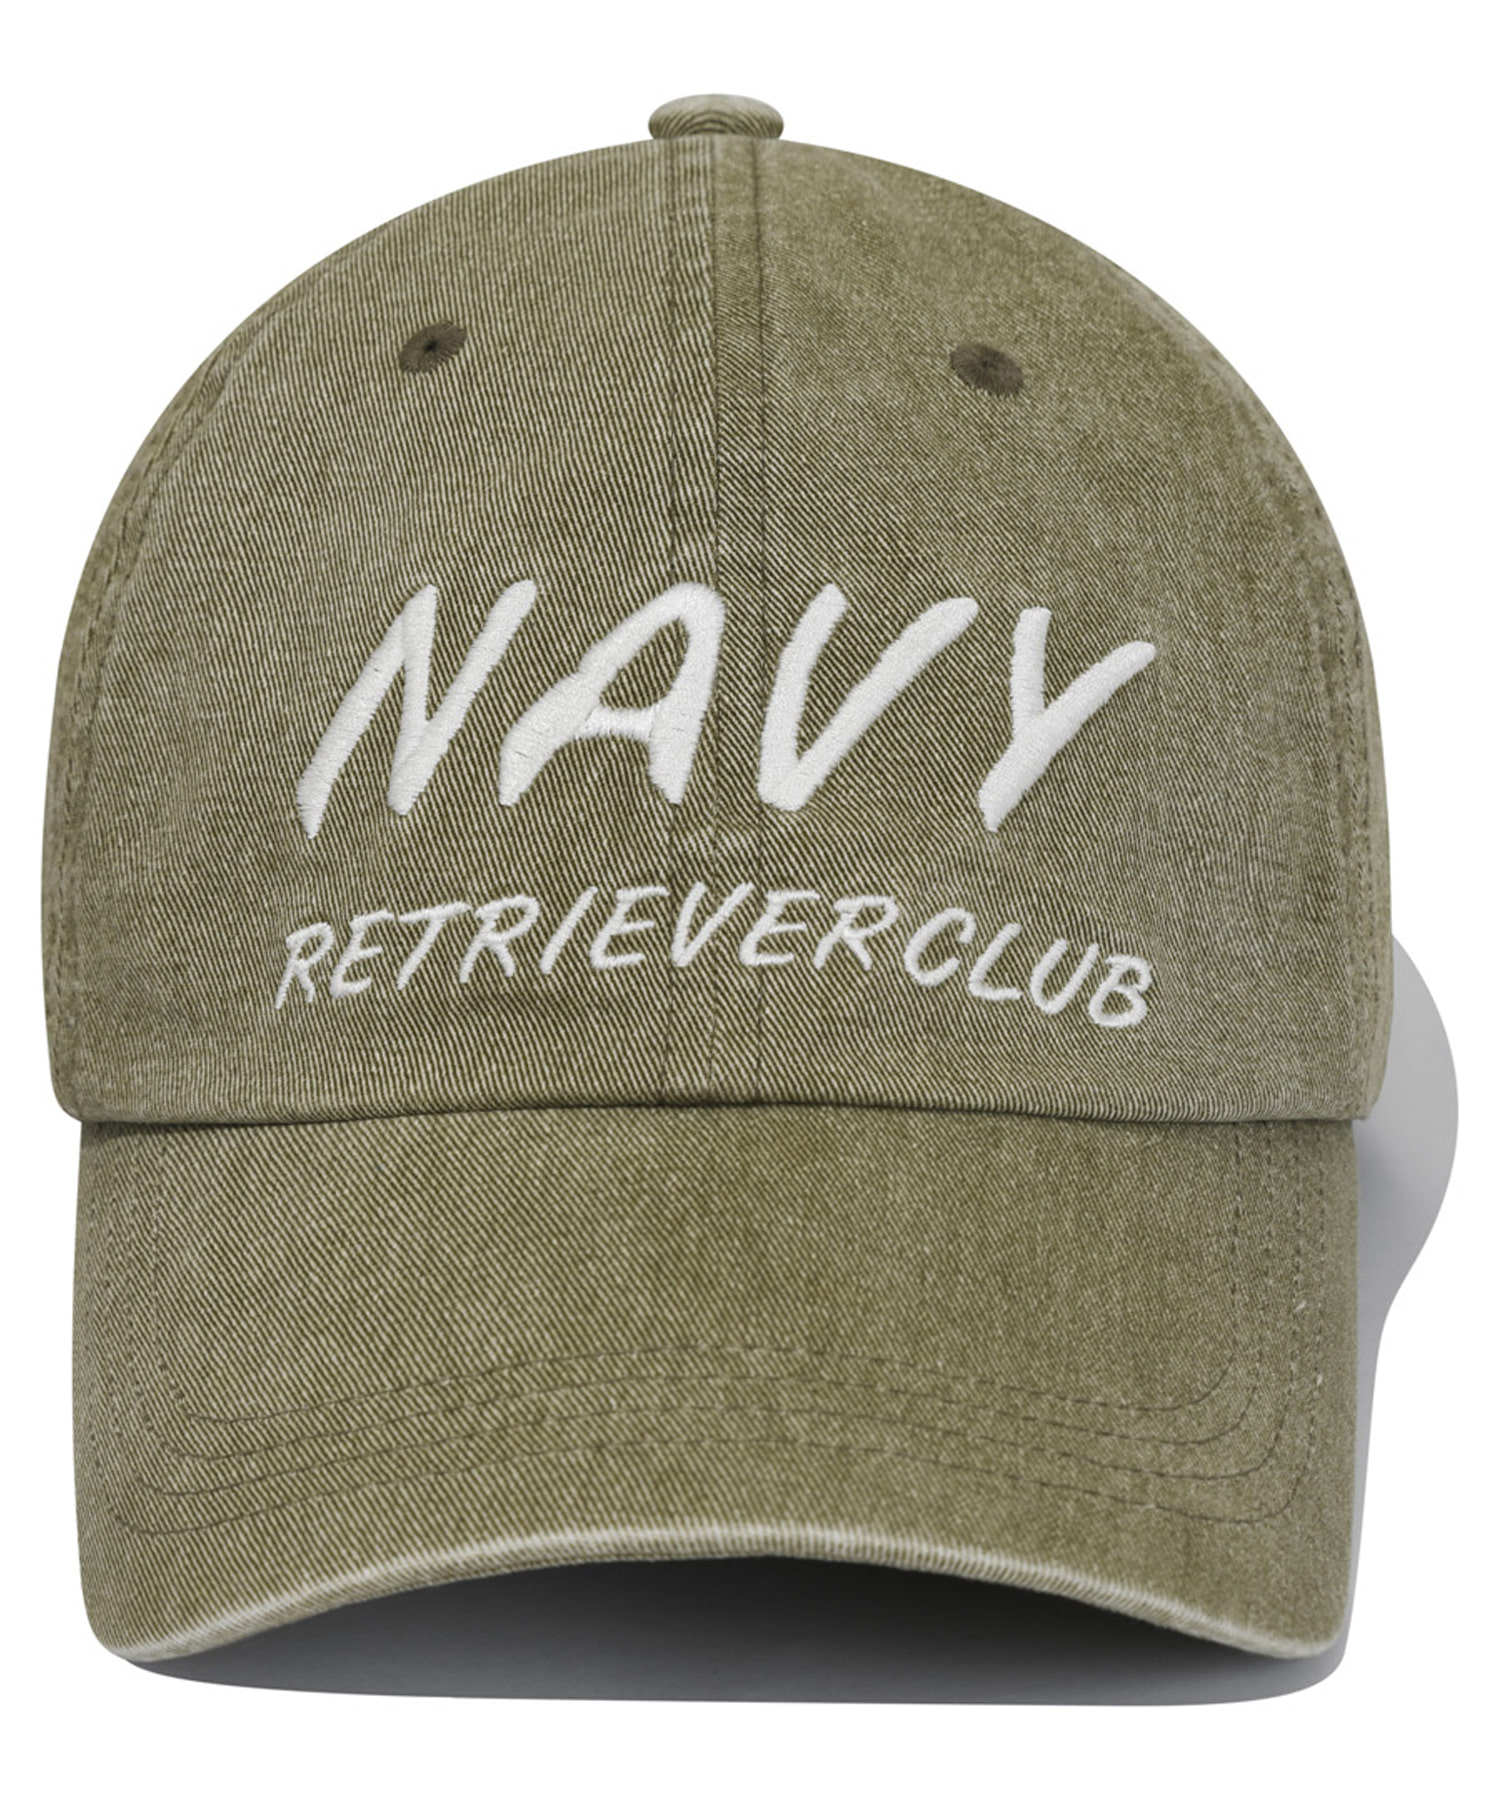 RC X NC NAVY RETRIEVER BALL CAP [KHAKI]